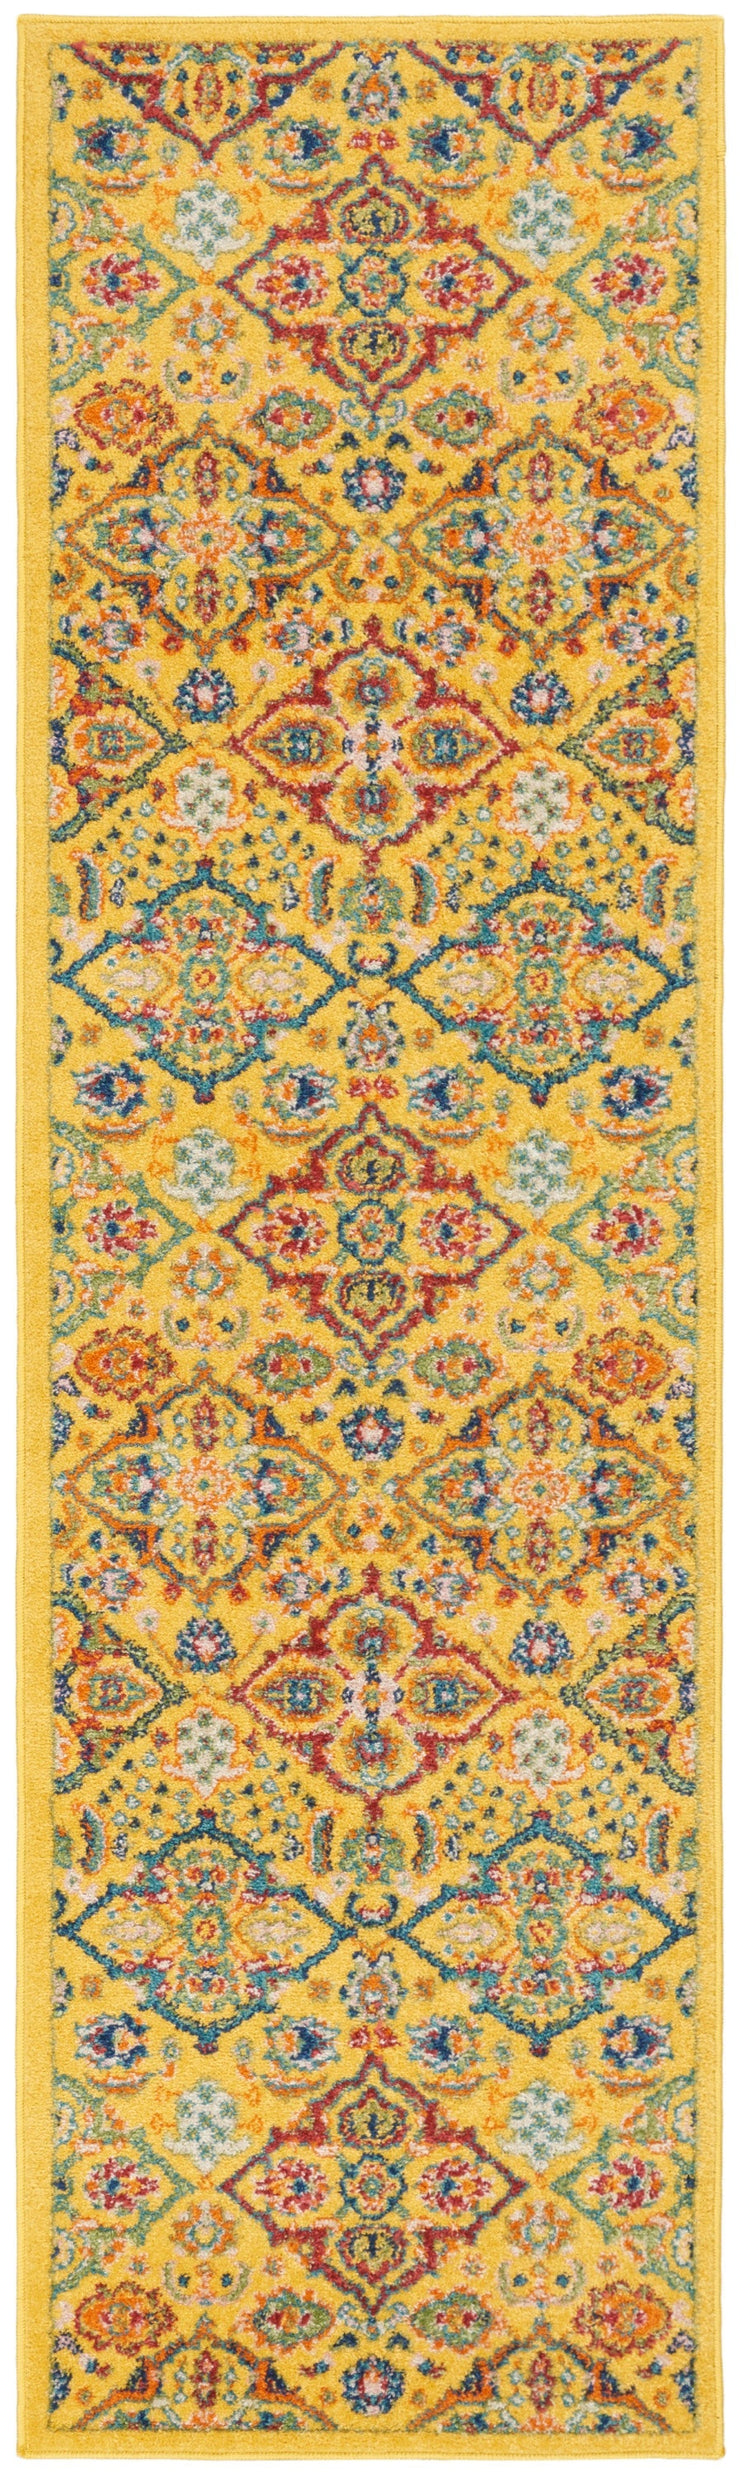 allur yellow multicolor rug by nourison 99446837493 redo 2